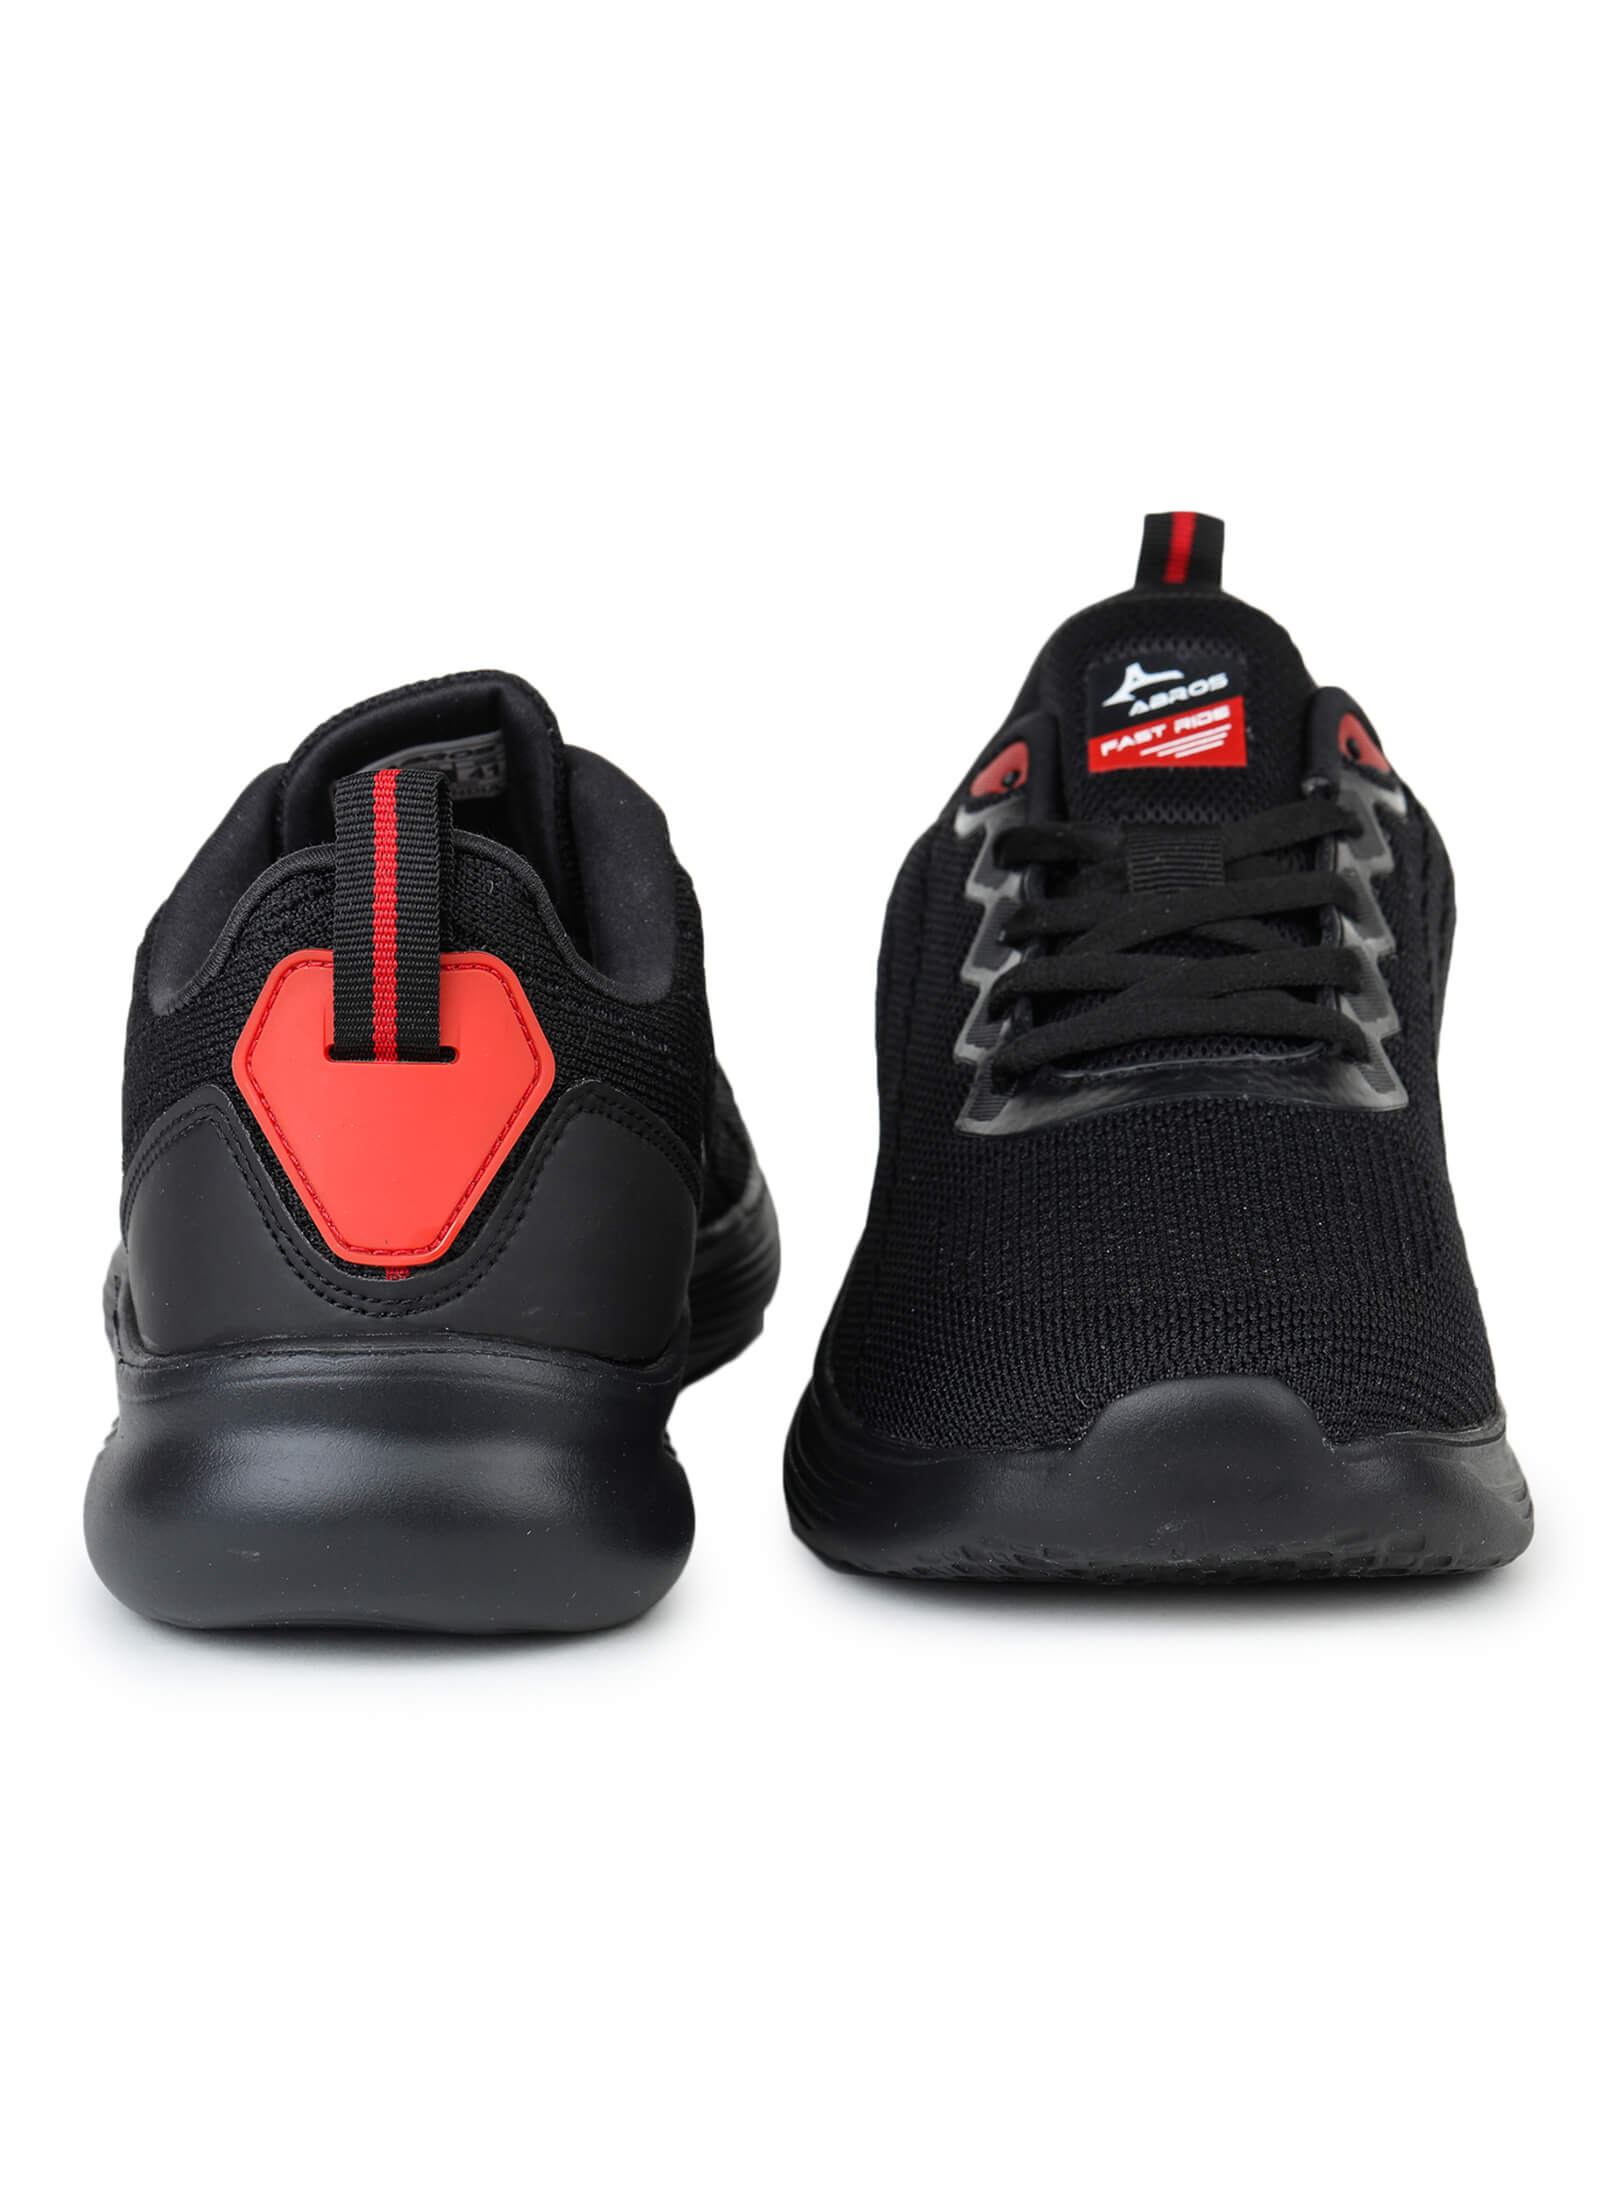 Orbit Lightweight Anti-Skid Sports Shoes for Men